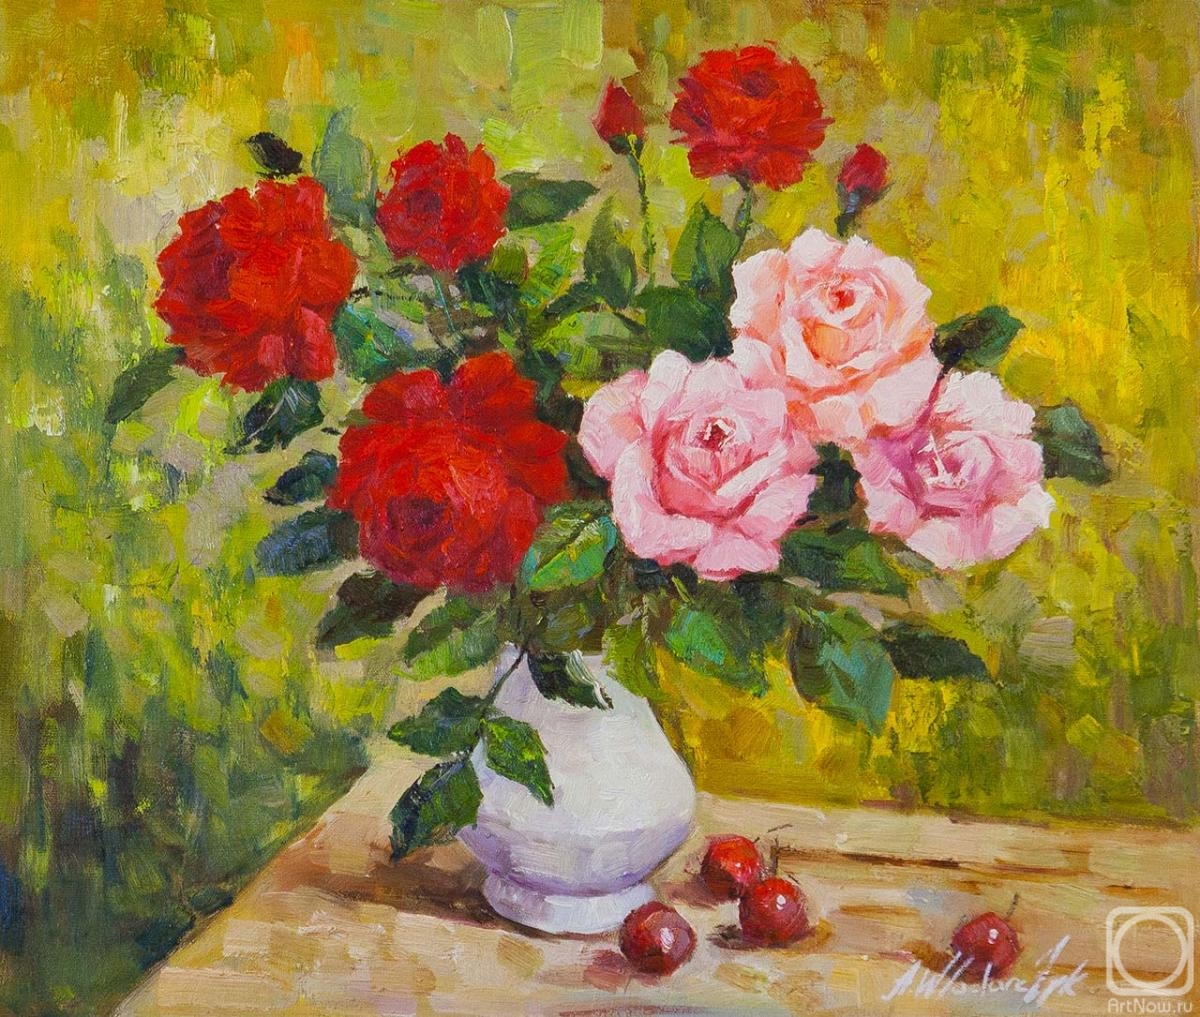 Vlodarchik Andjei. Roses and cherries